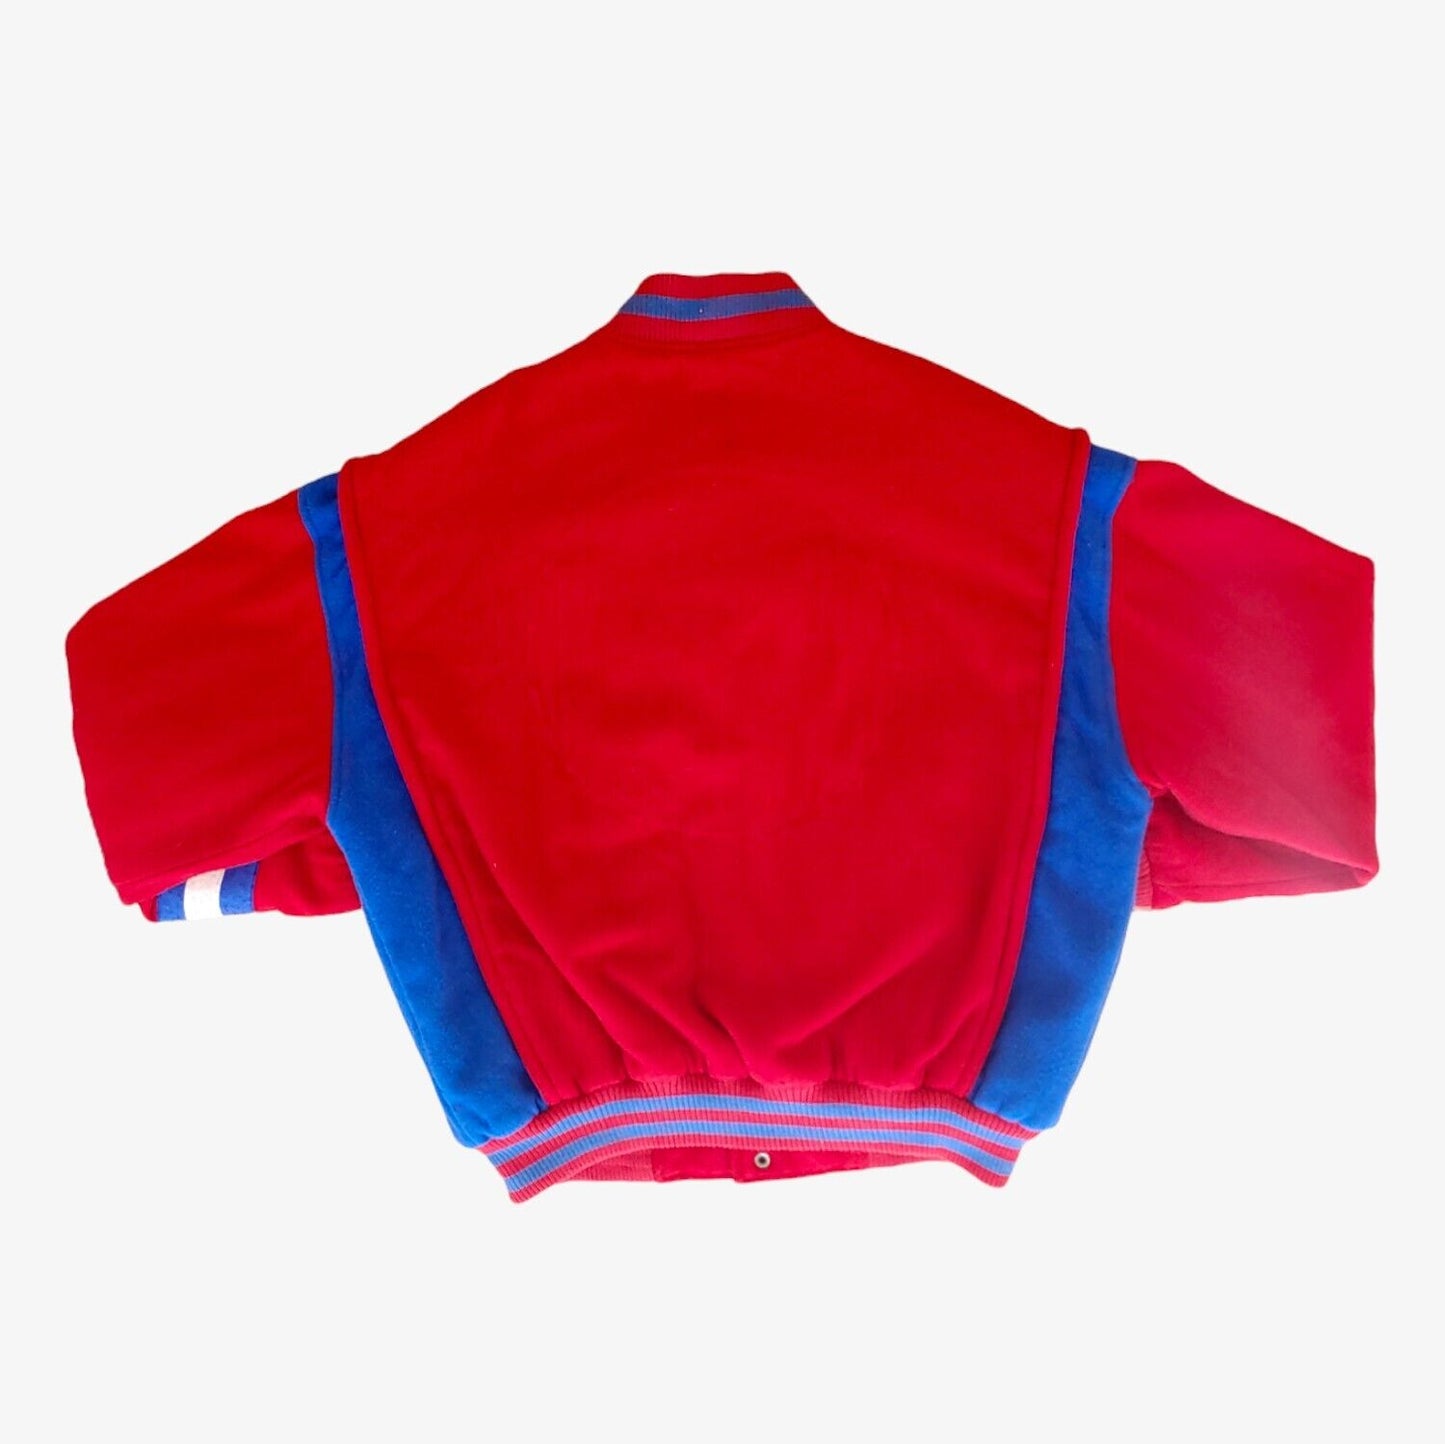 Vintage 1993 Bayern Munich Munchen Football Club Red & Blue Wool Varsity Jacket Back - Casspios Dream